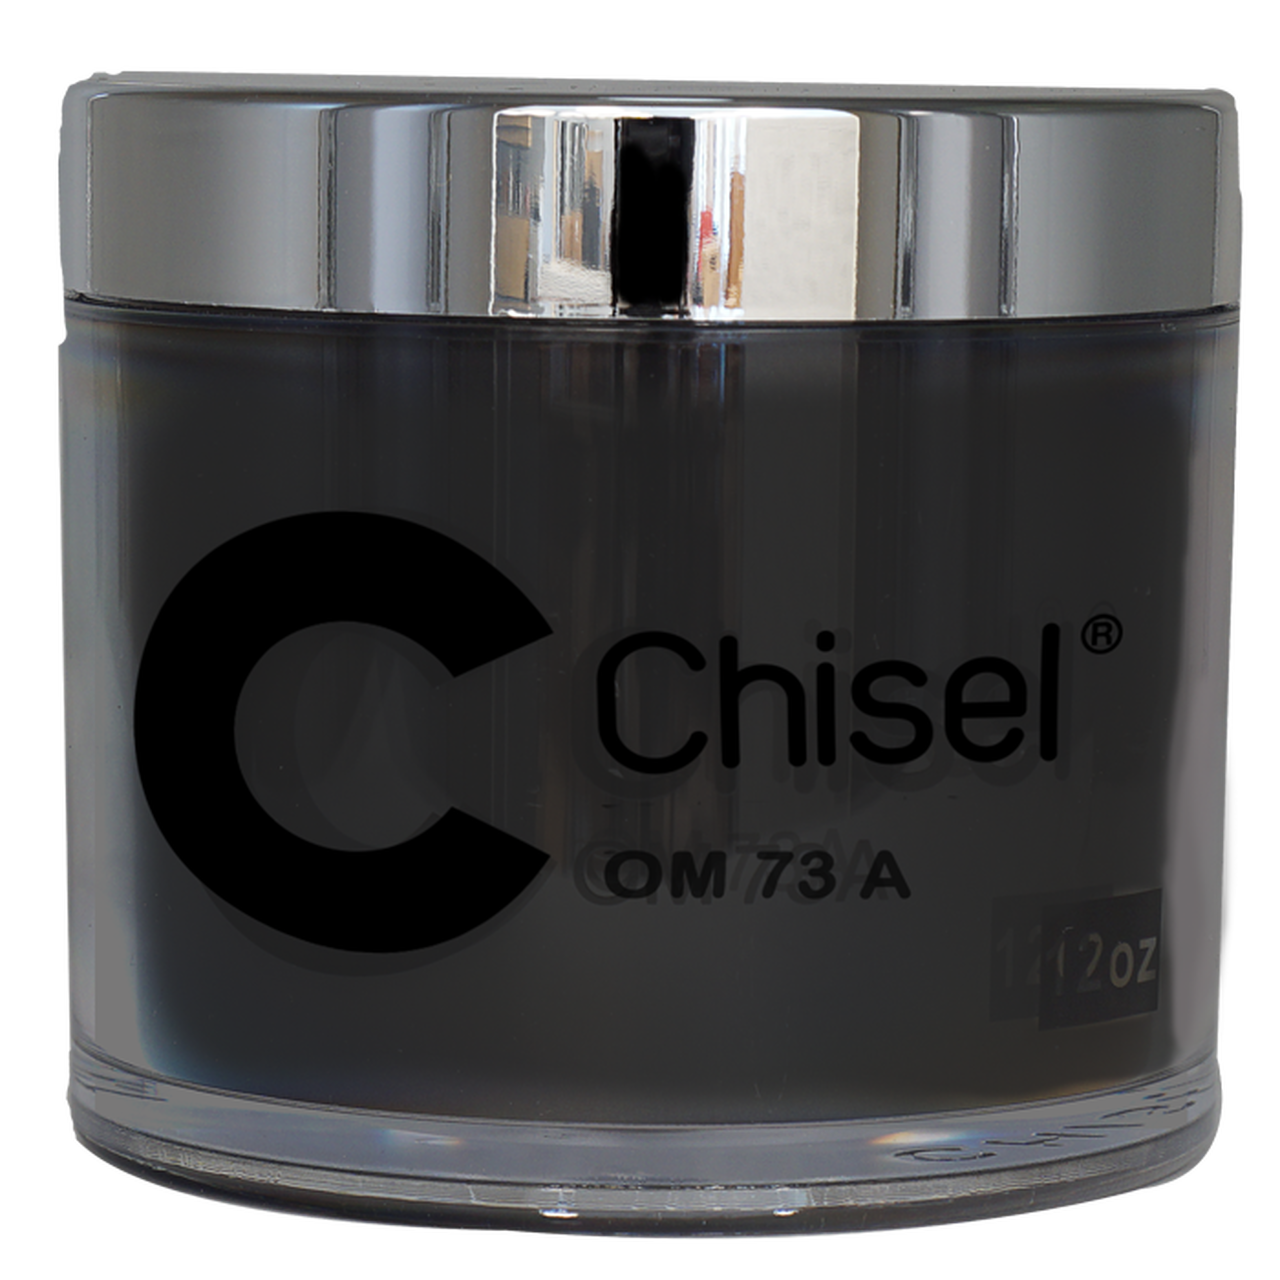 Chisel Nail Art Dipping/Acrylic 2in1 Powder - 12oz BLACK (OM73A) Refill size